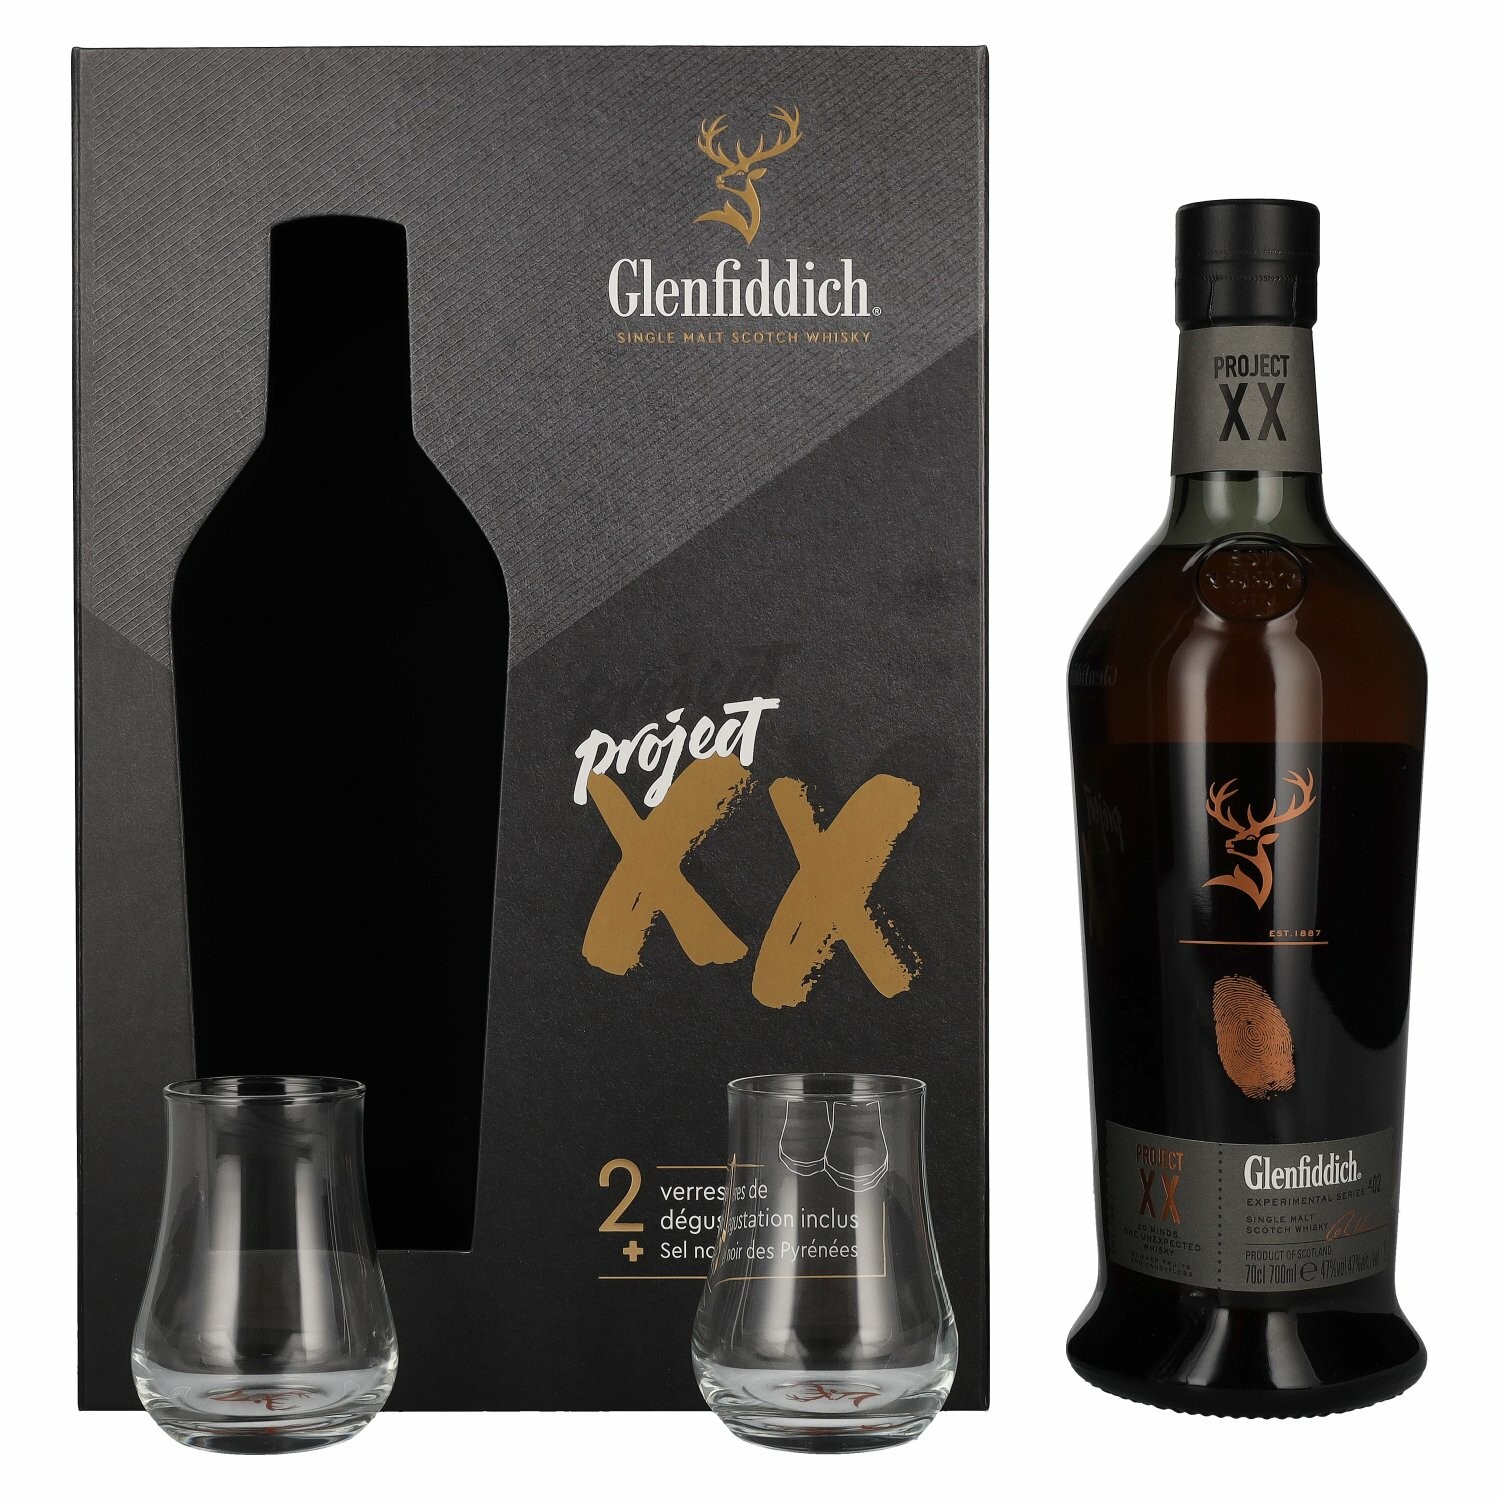 Glenfiddich PROJECT XX Single Malt Scotch Whisky 47% Vol. 0,7l in Giftbox with 2 glasses and schwarzem Salz